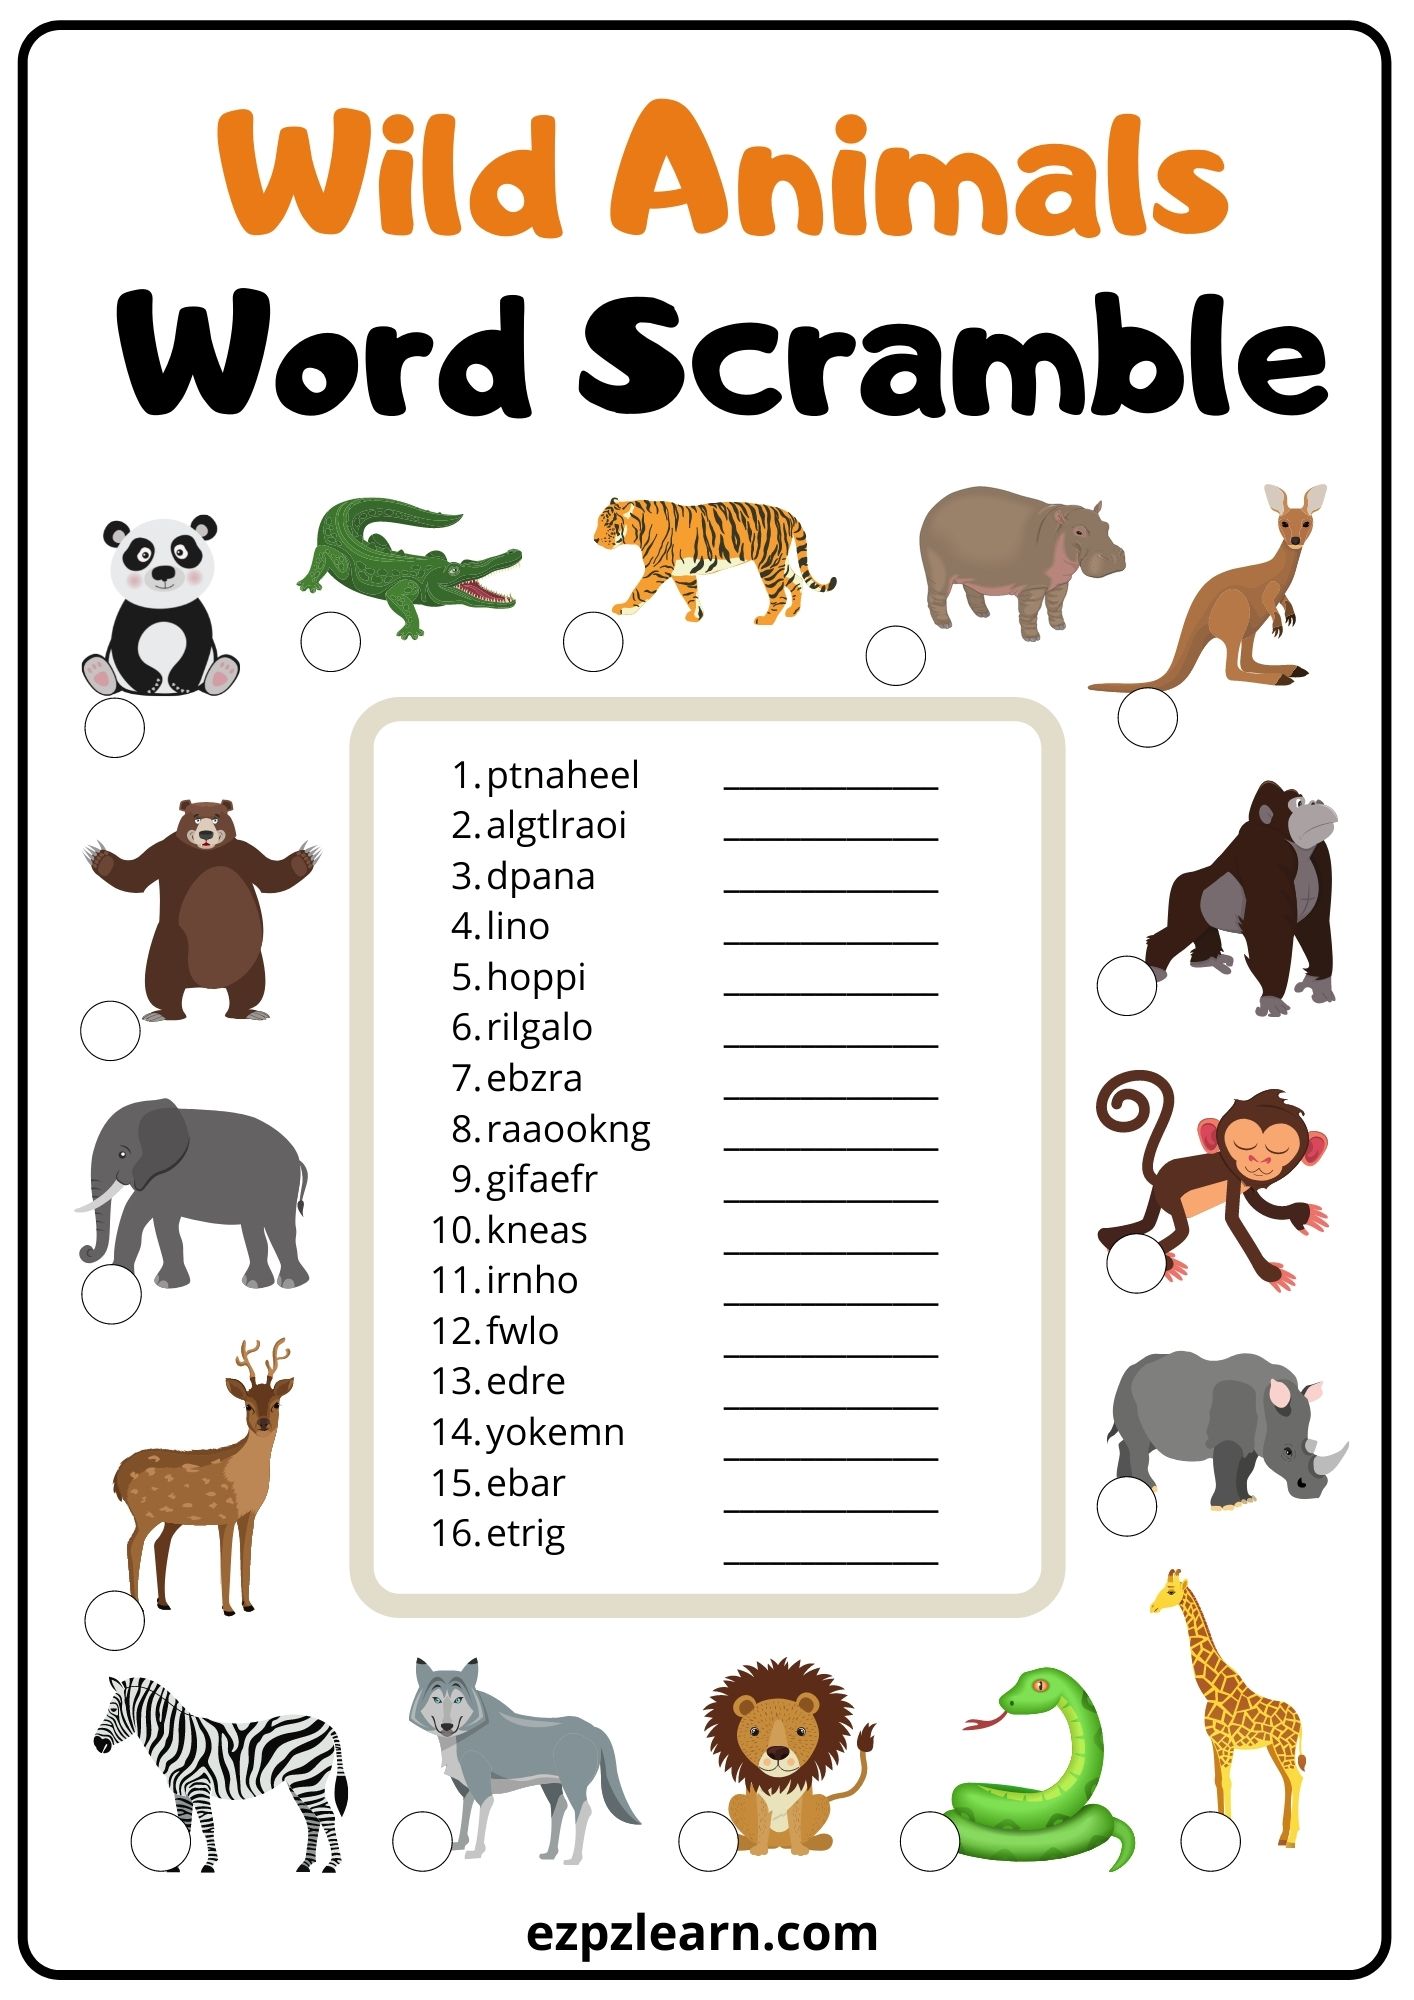 wild-animals-word-scramble-2-ezpzlearn